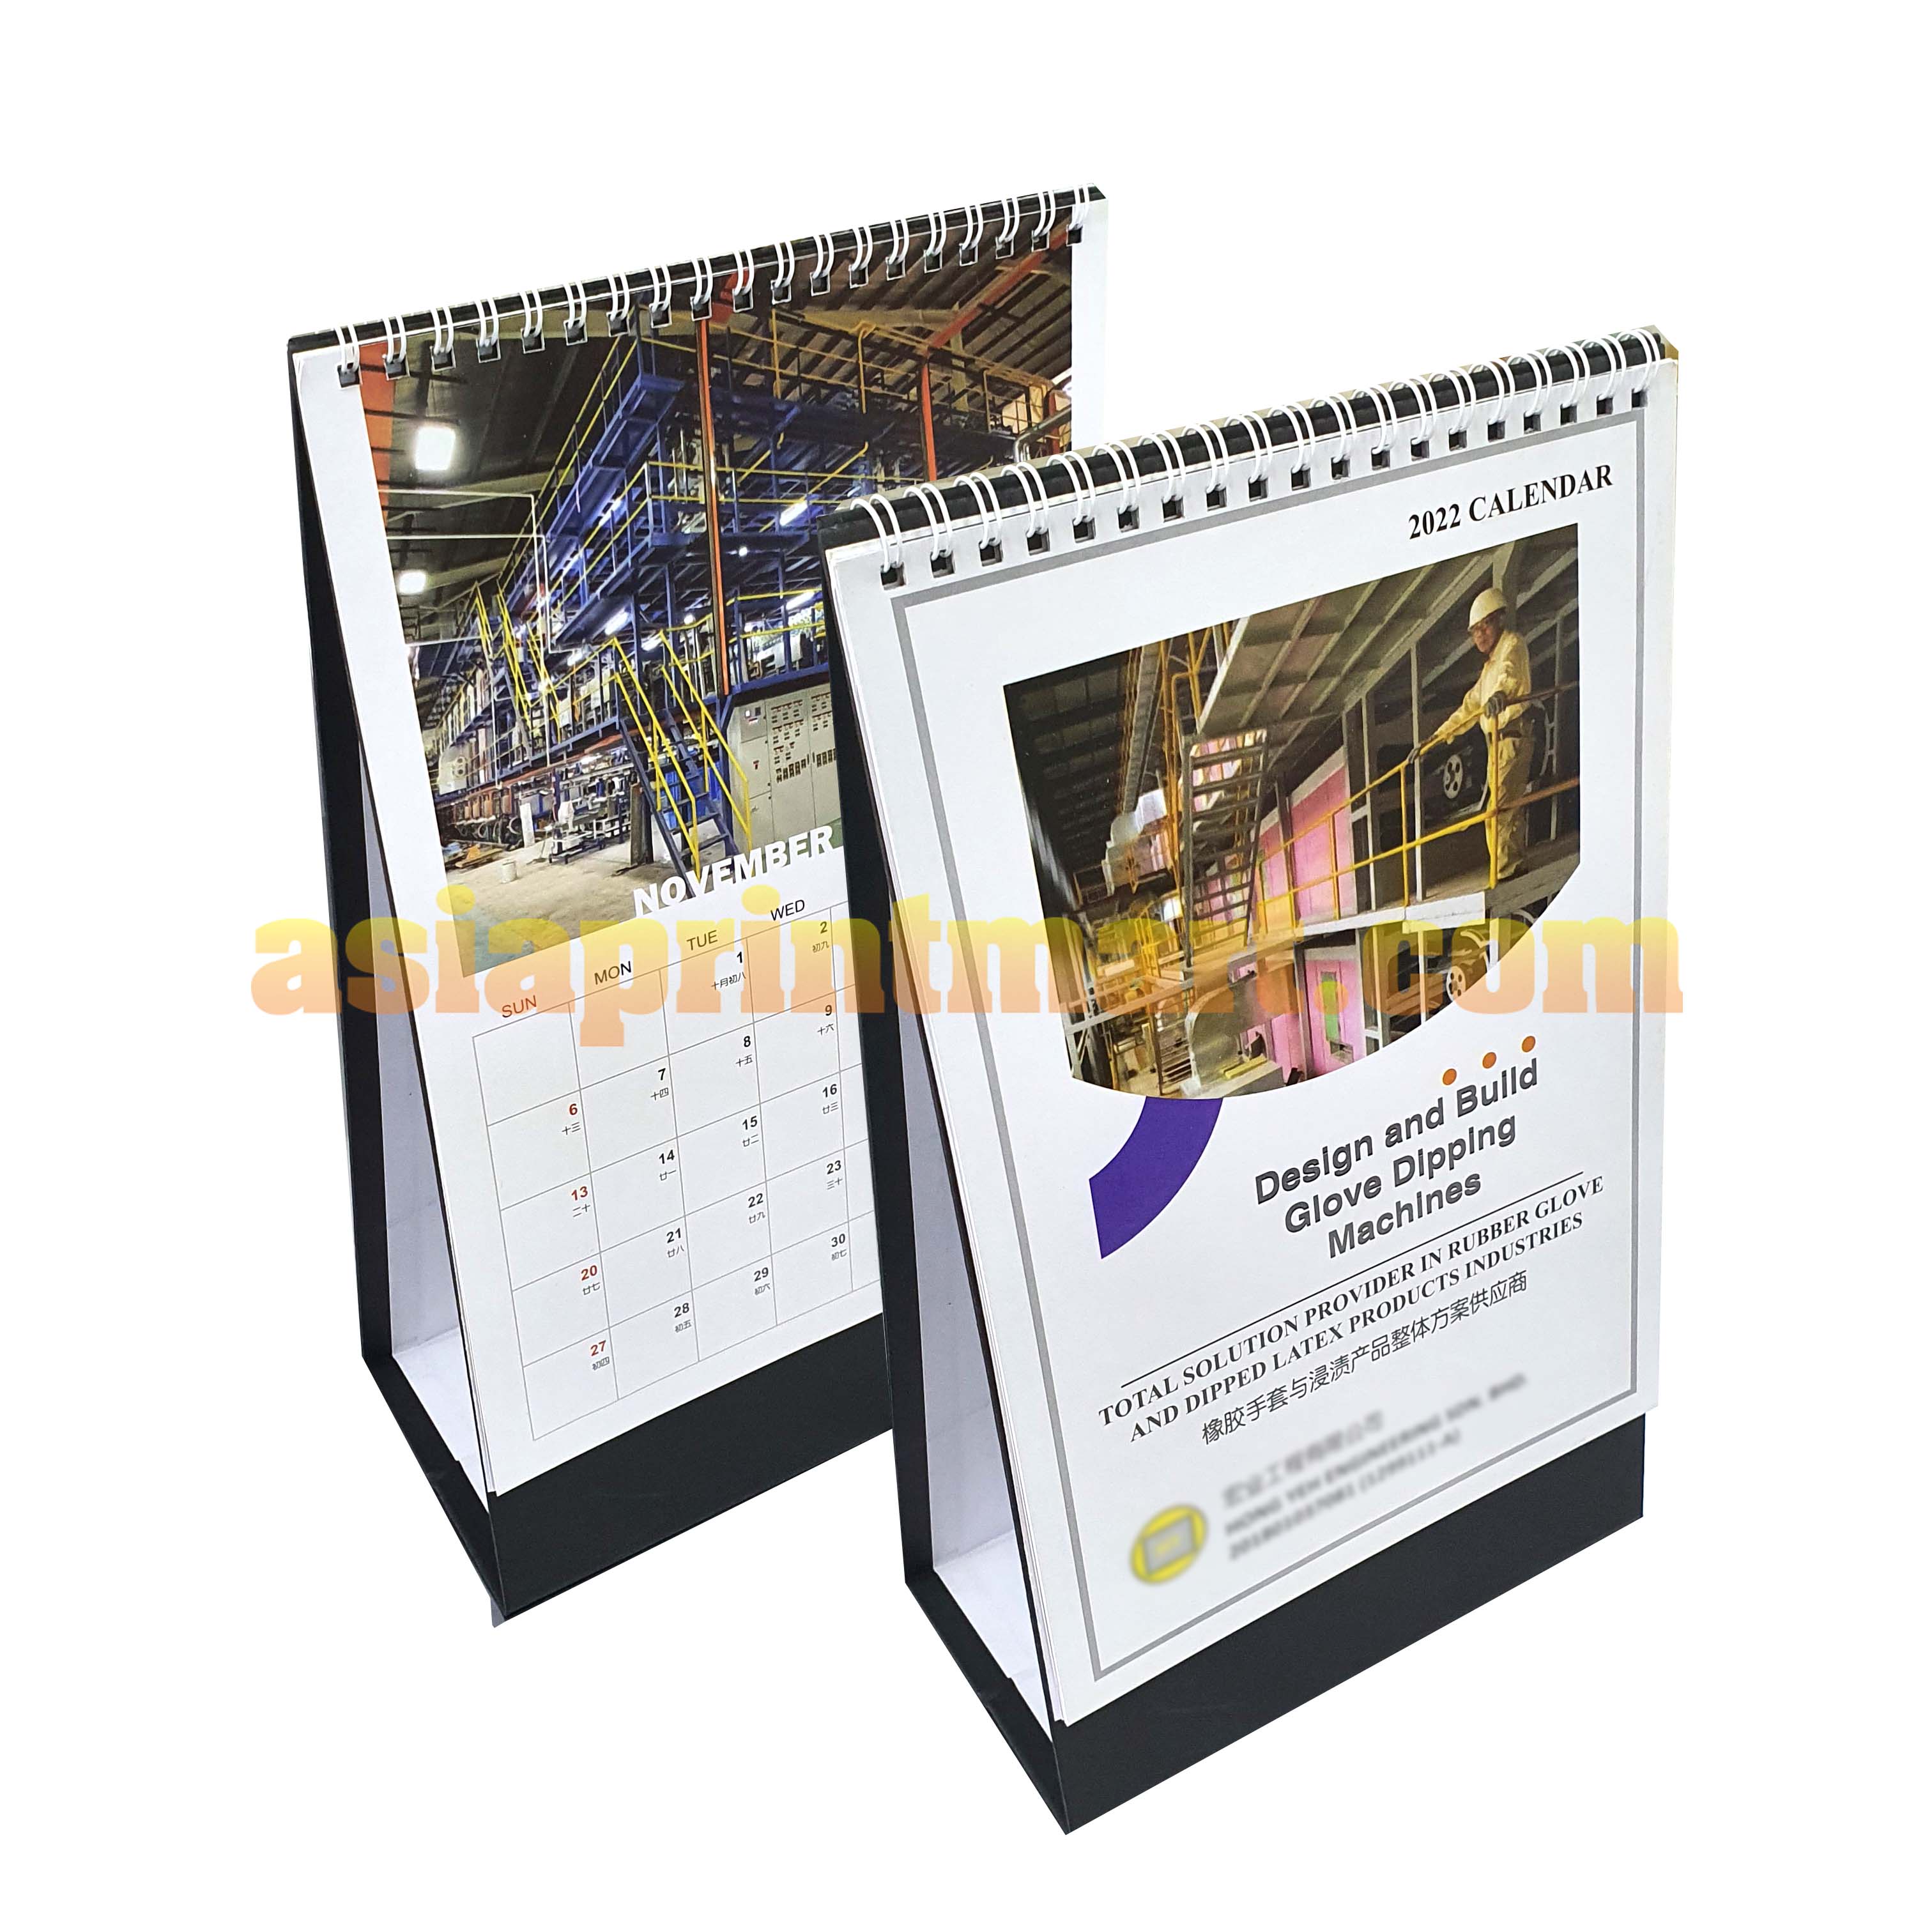 Calendar shop, Calendar printing company, Table calendar manufacturer, Ready made table calendars printing shop, Kilang cetak kalendar, corporate calendars printing